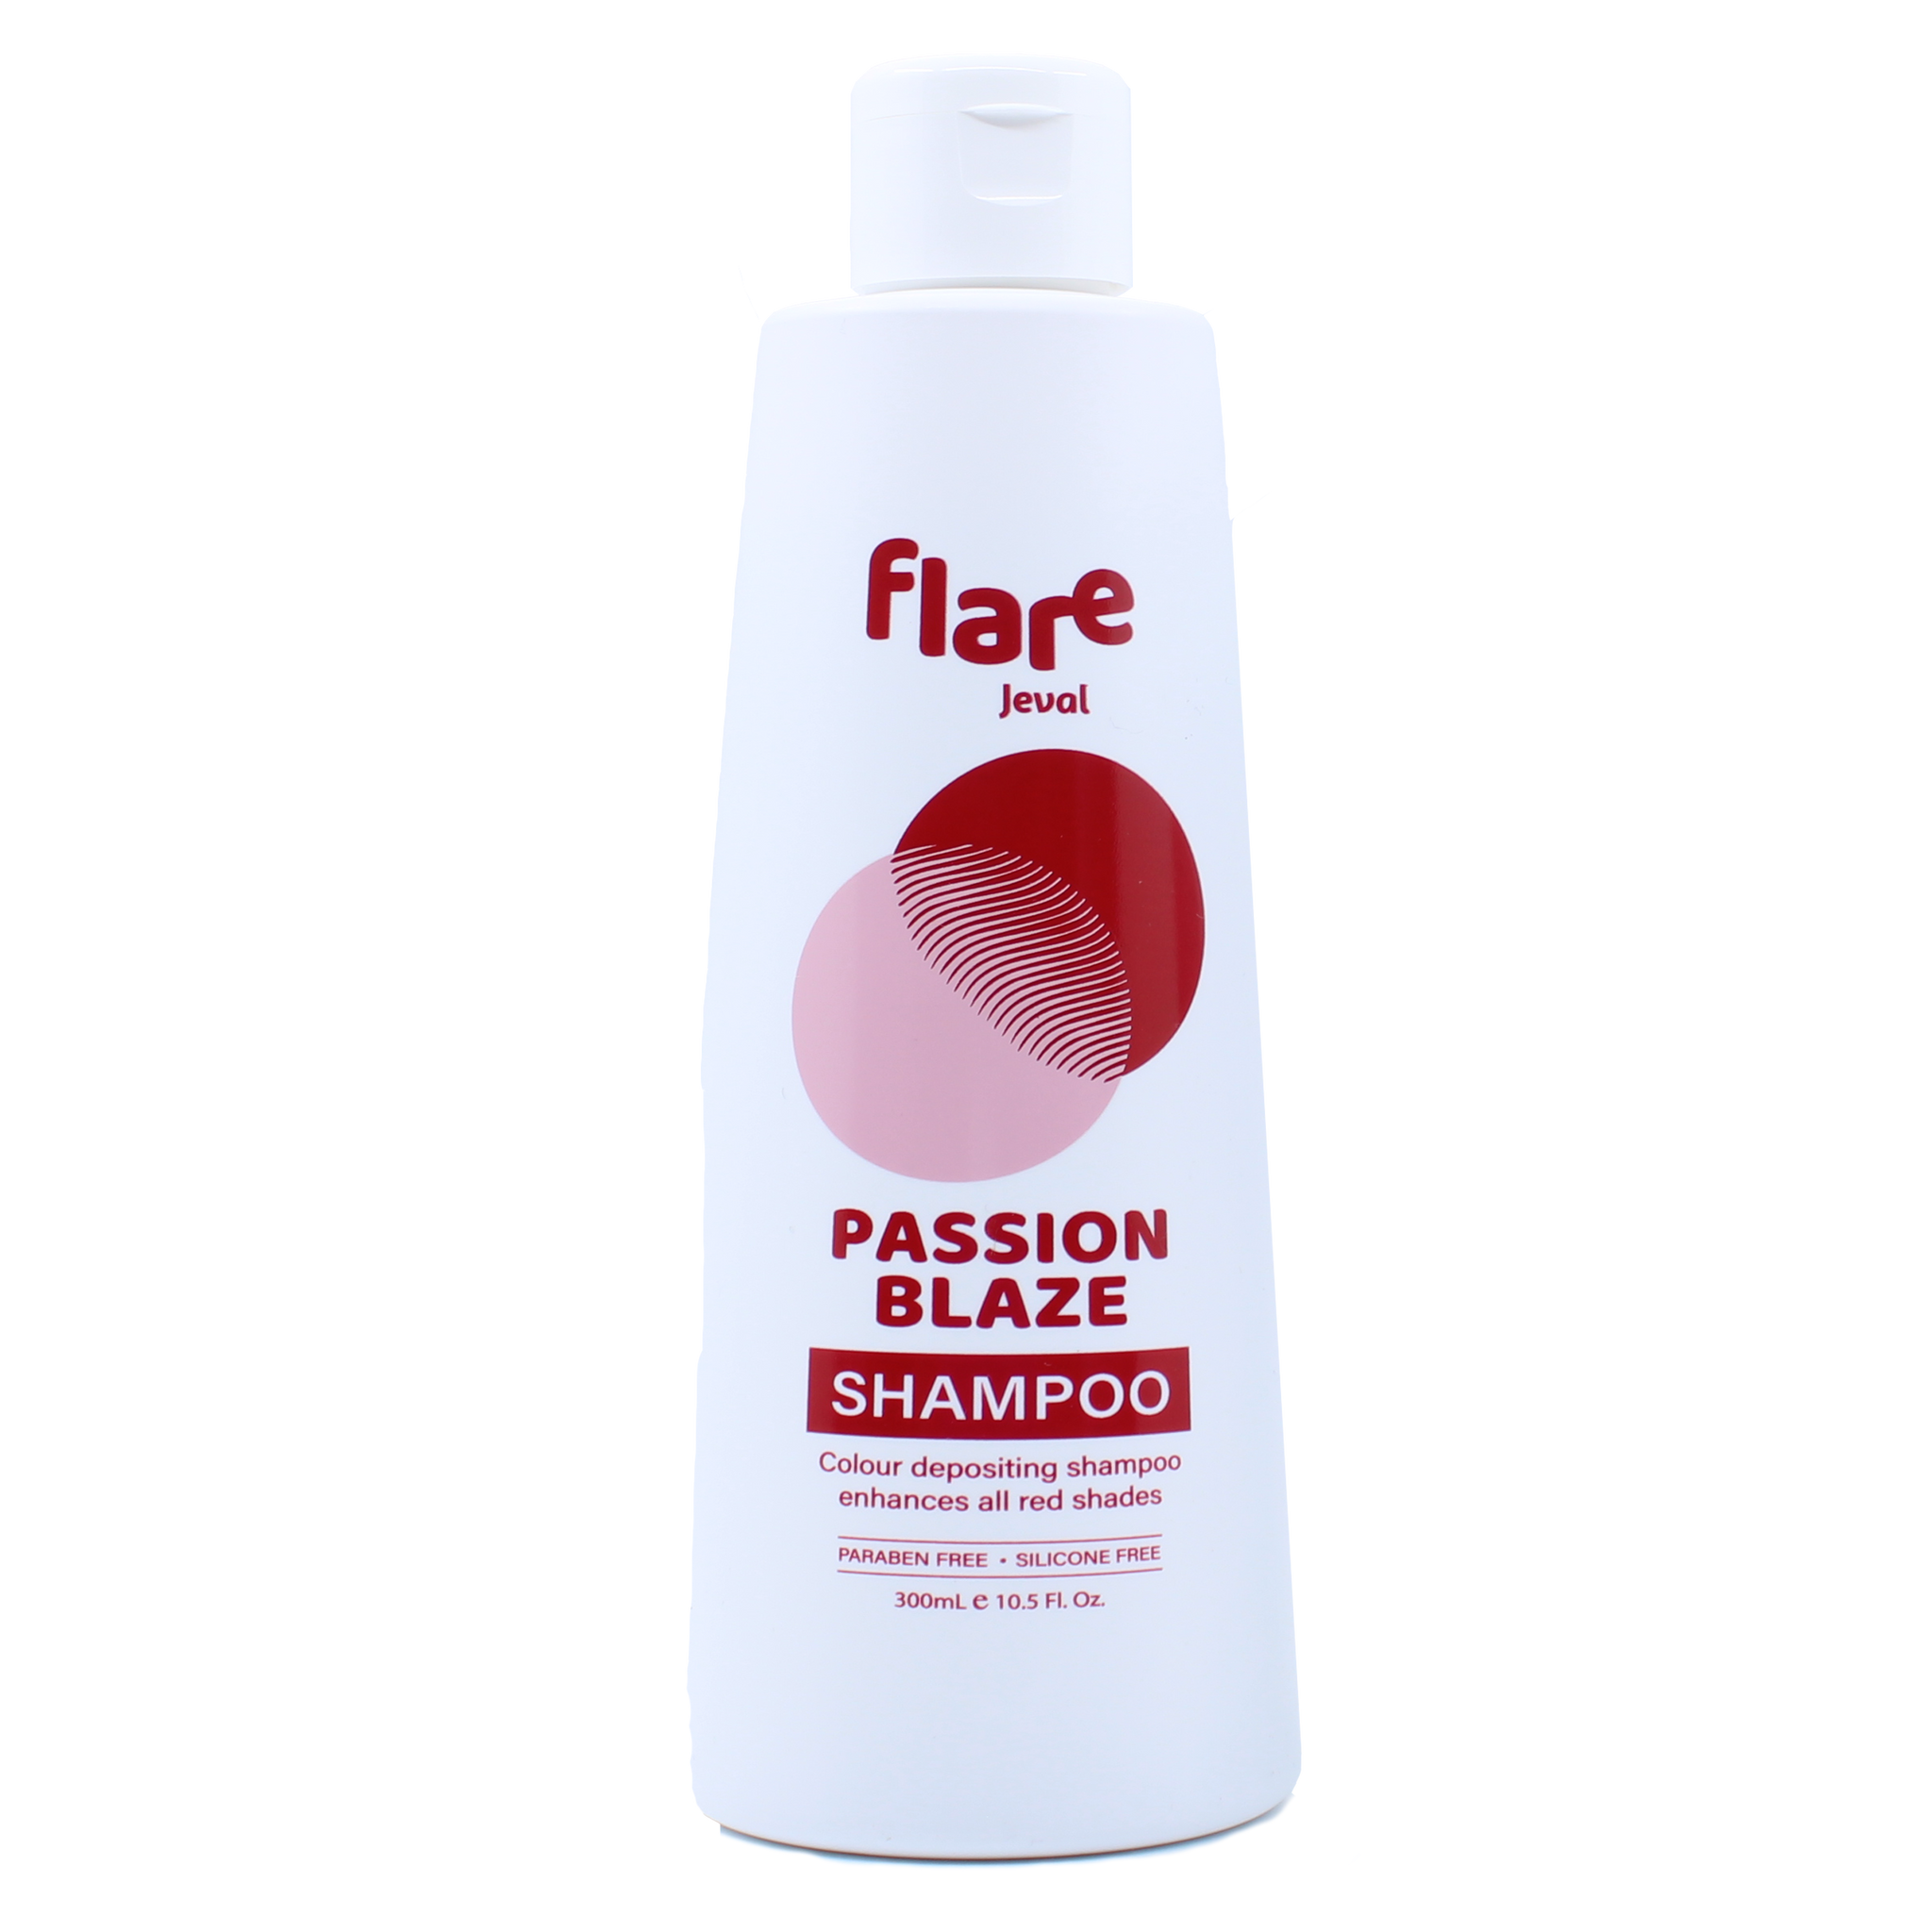 Jeval Flare Passion Blaze Shampoo 300ml